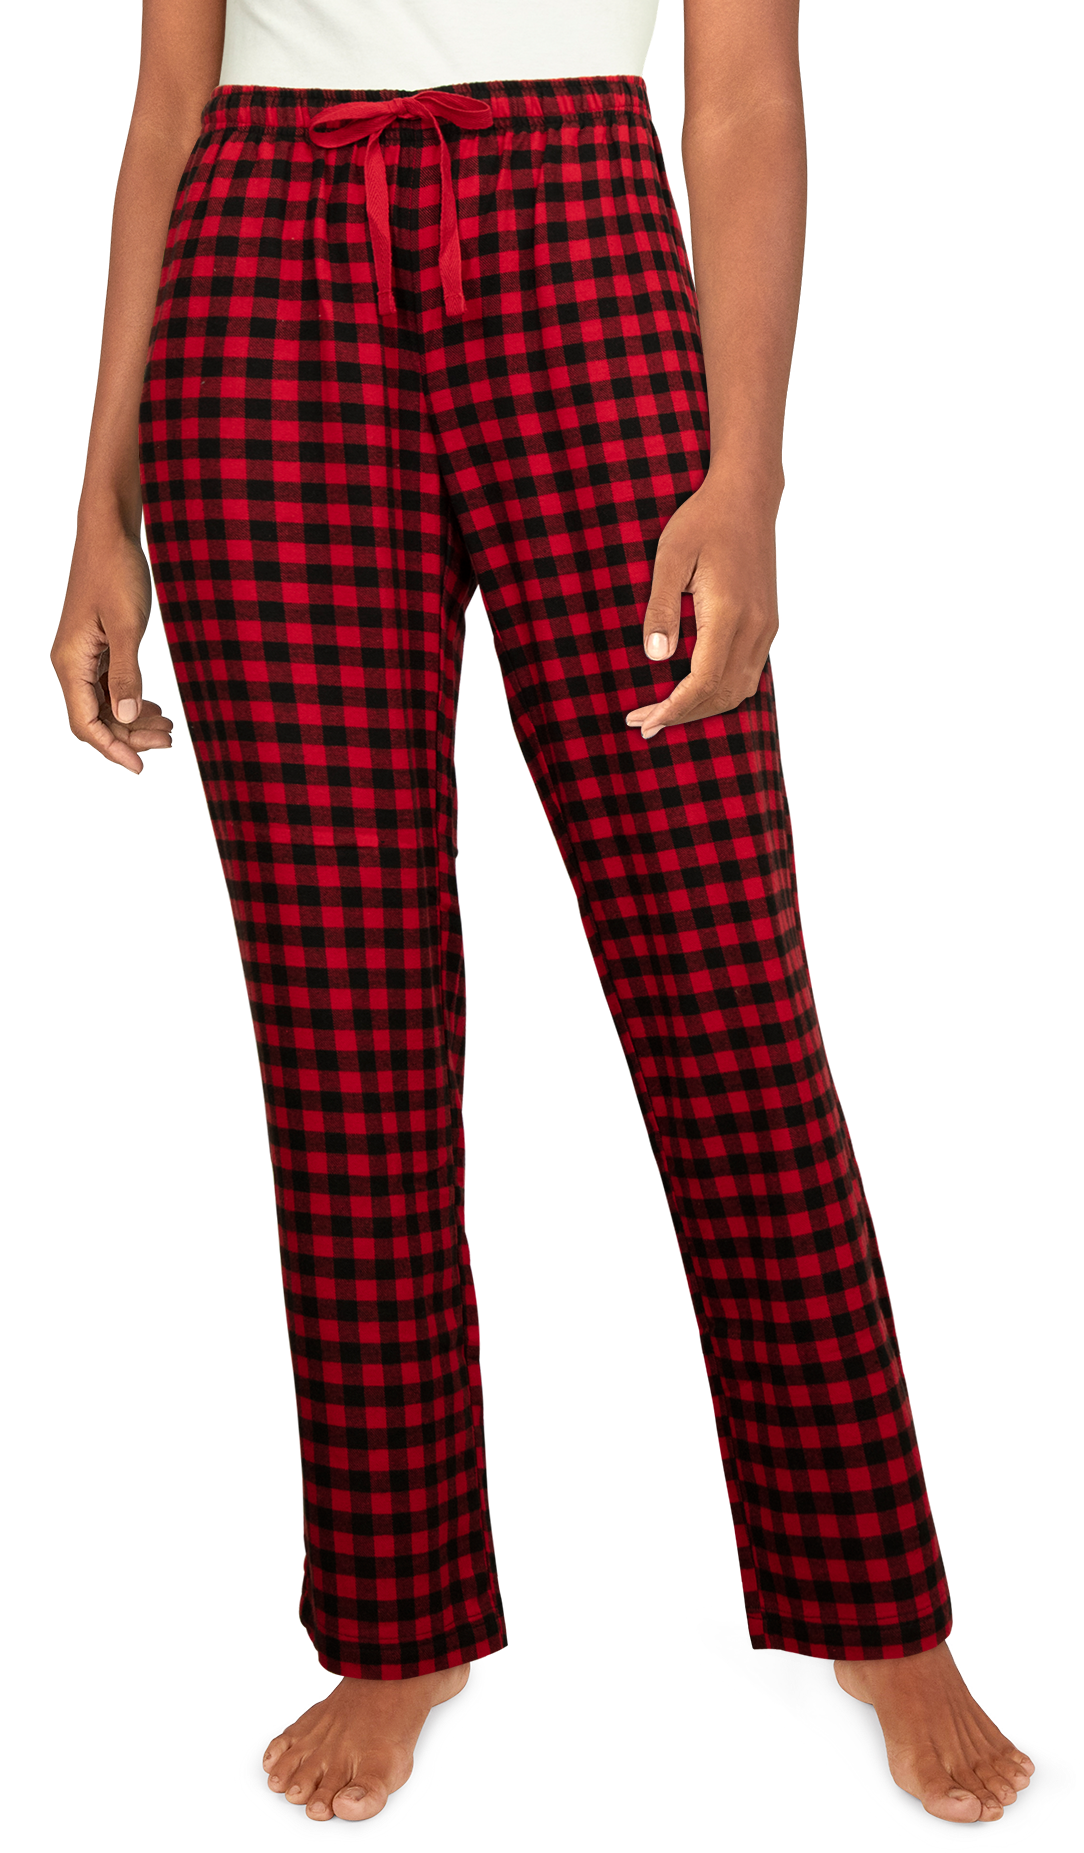 Natural Reflections Promo Pajama Pants for Ladies | Bass Pro Shops